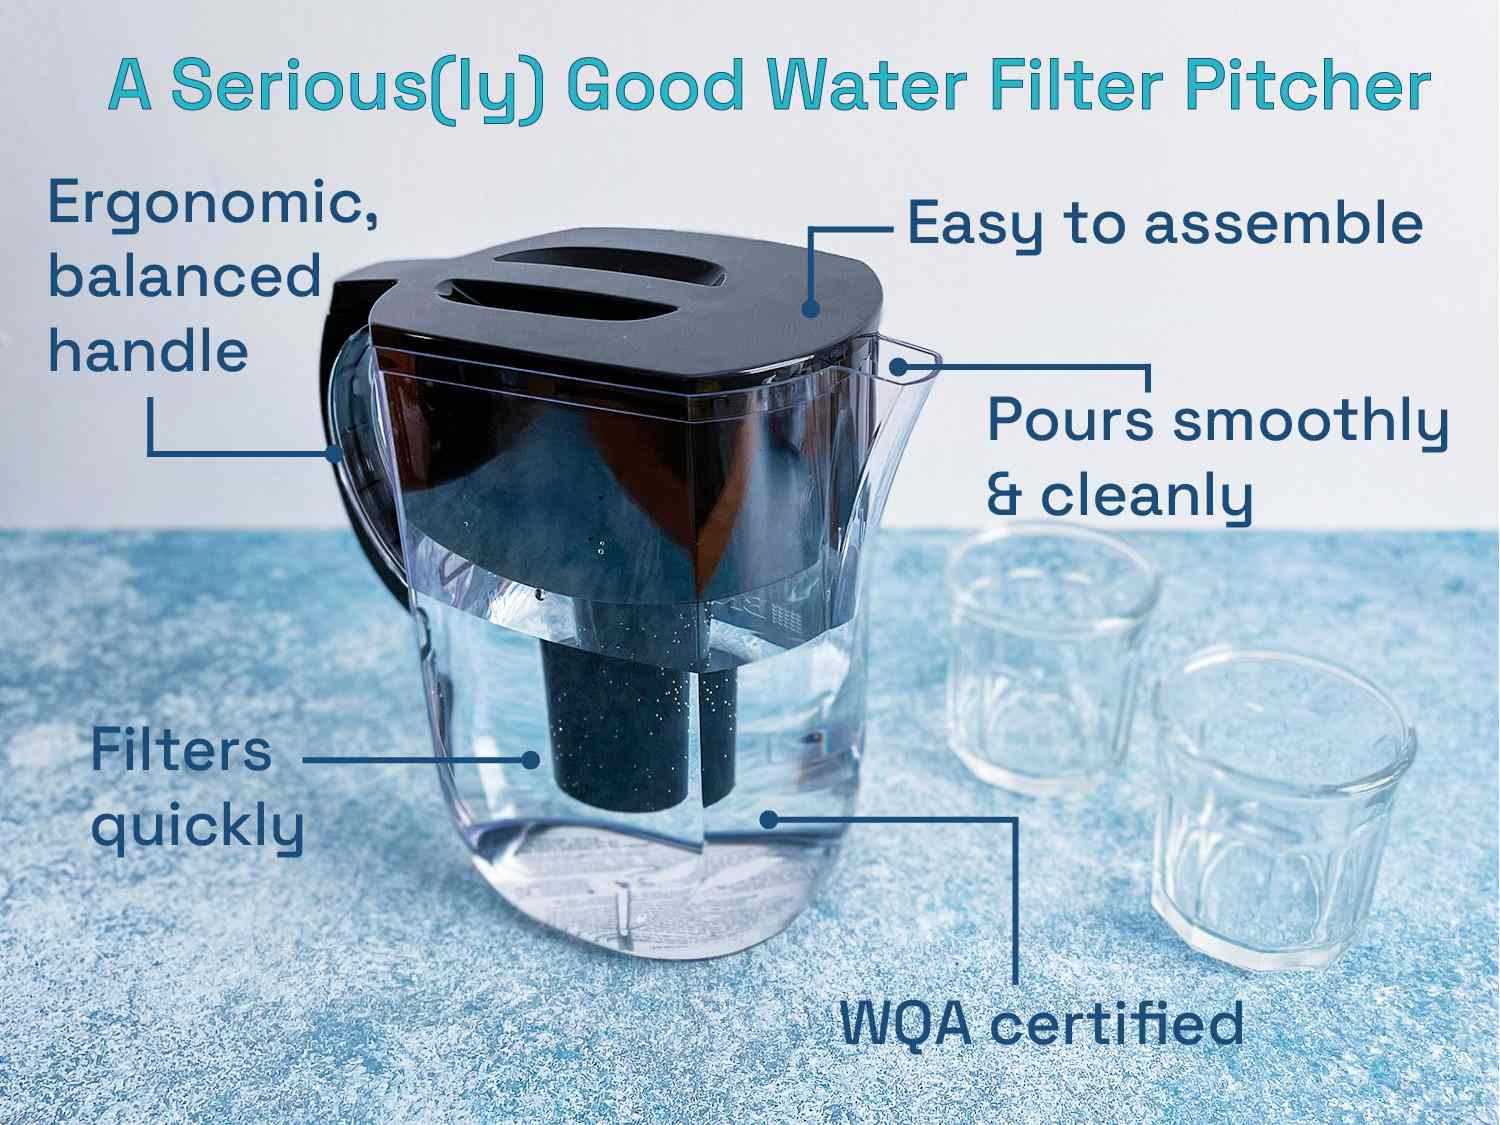 Brita滤水罐:快速过滤，WQA认证，易于组装，符合人体工程学，平衡的手柄，倒平稳，干净。